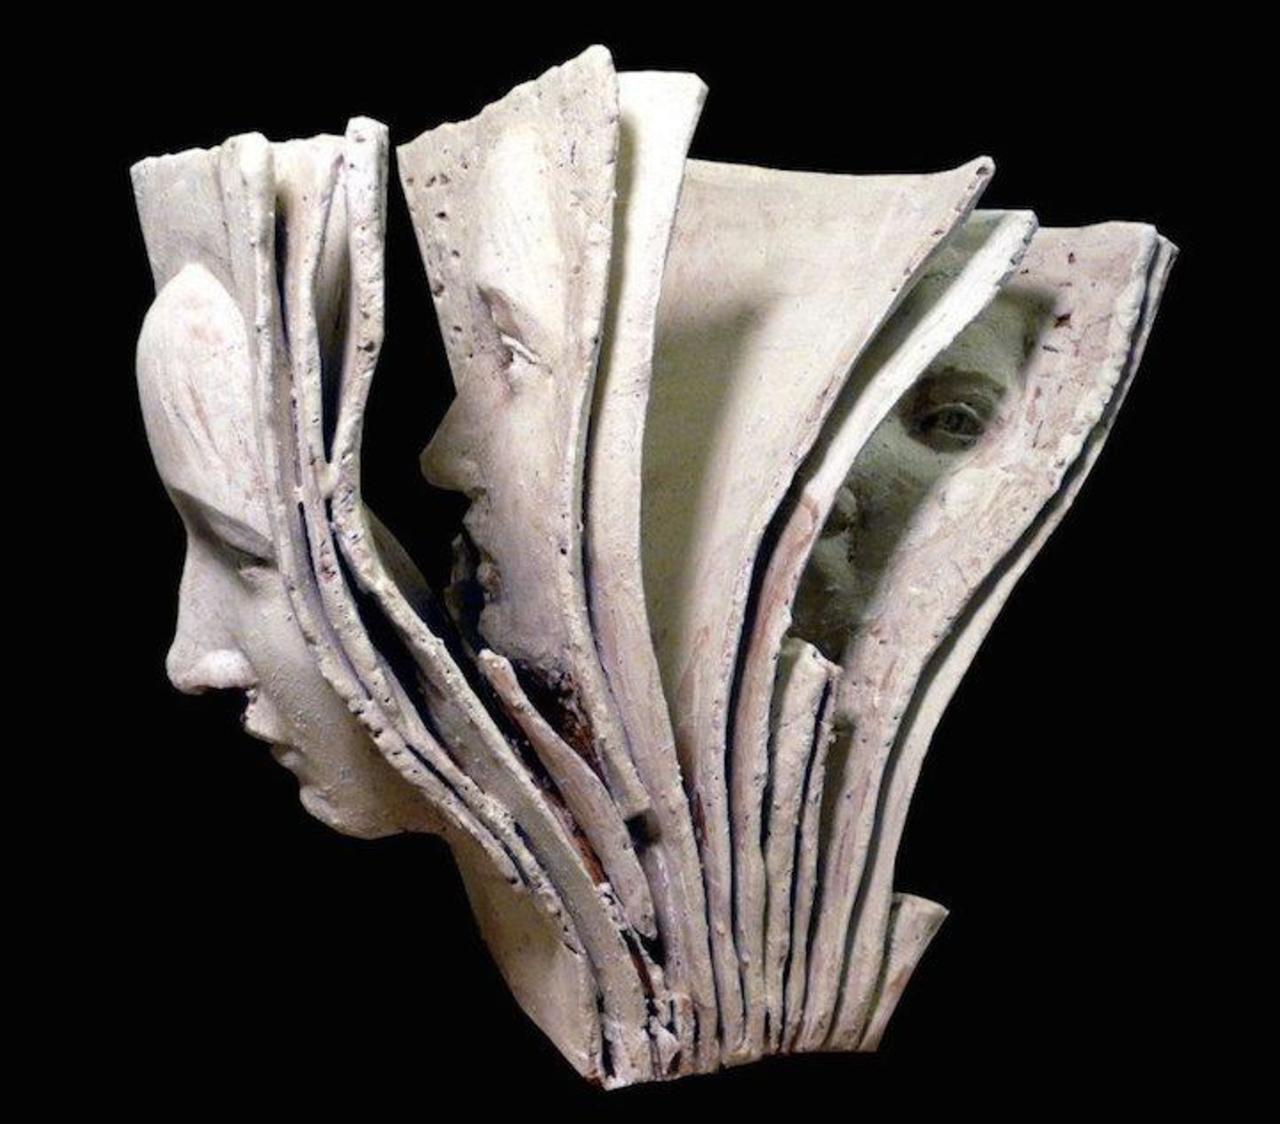 RT @KimKaosDK: Paola Grizi's Terracotta Book Sculptures Tell Deep Stories with Faces
#Art #Sculpture #Contemporary #Italy http://t.co/UwuqPTGCtu